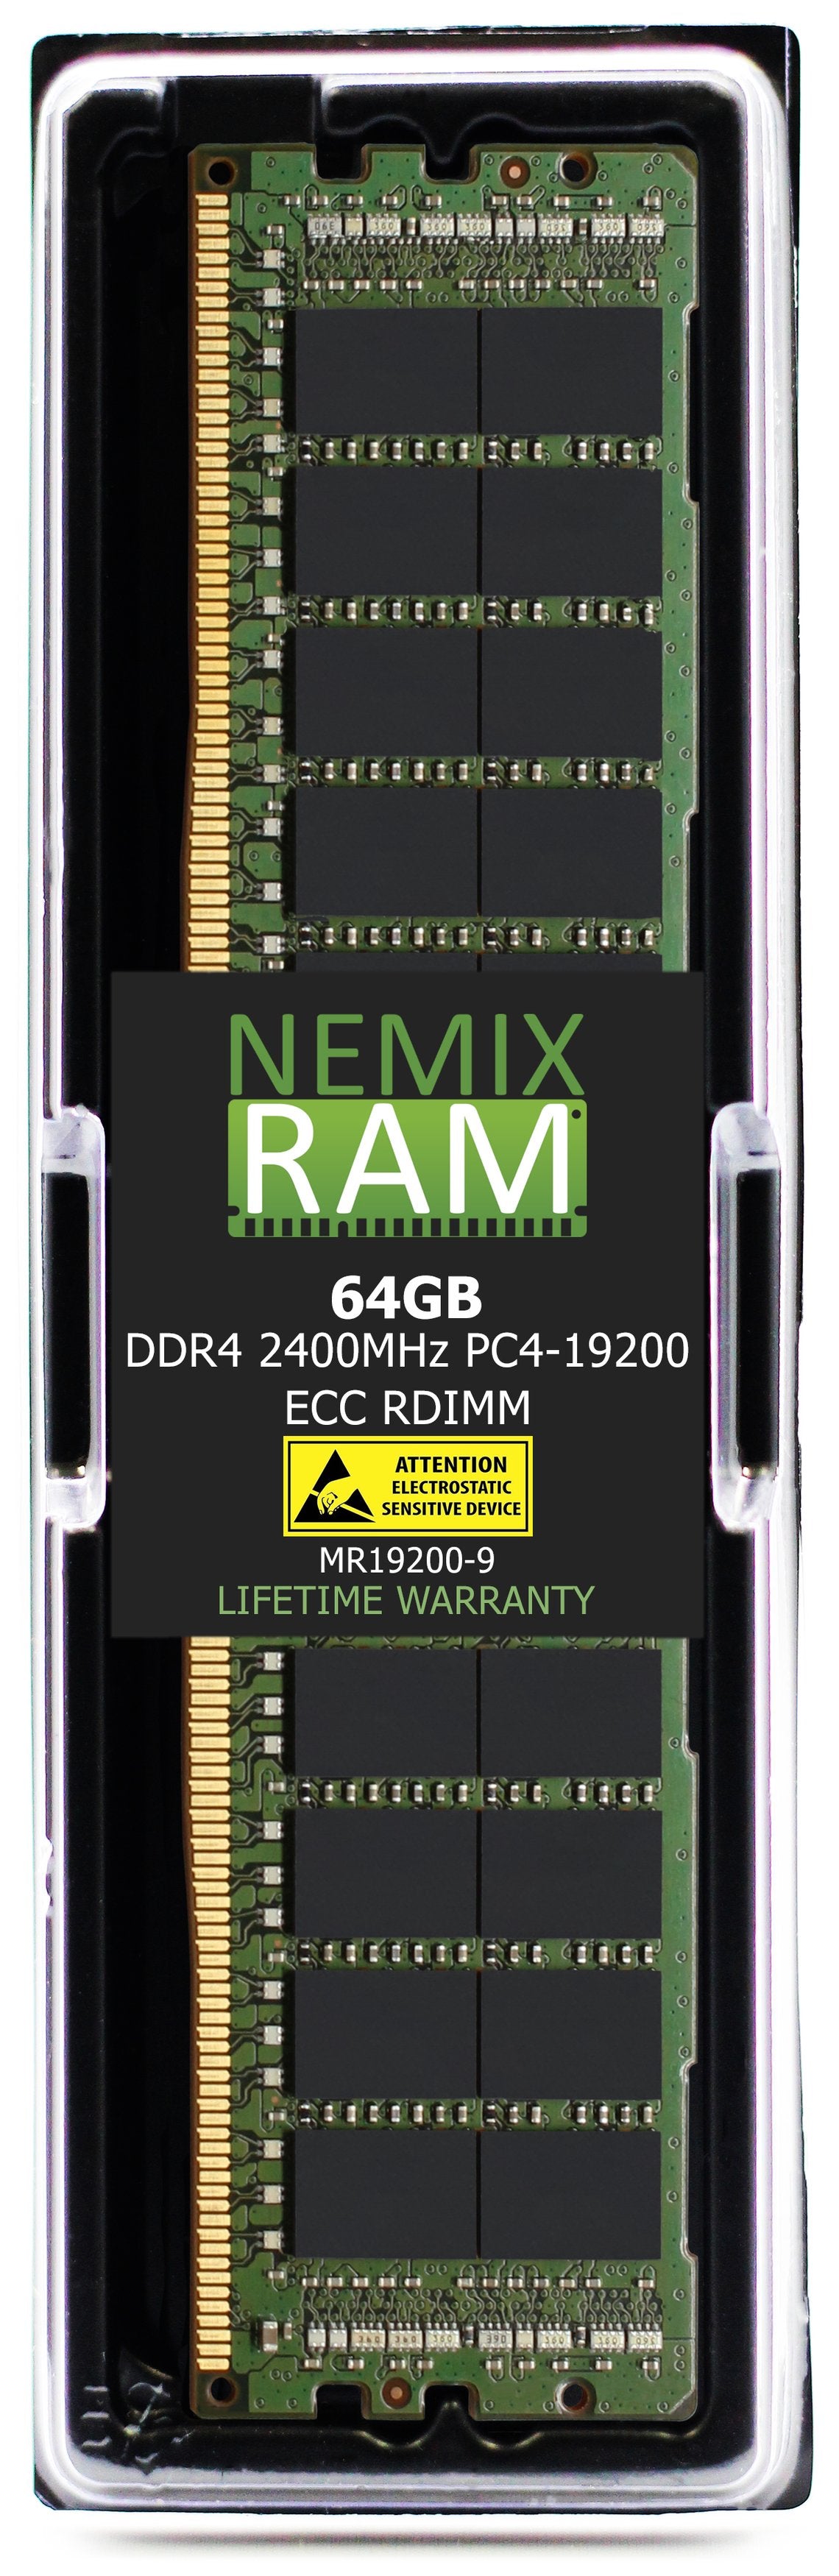 NEC Express5800 T120g Memory Module N8102-690F 64GB DDR4 2400MHZ PC4-19200 RDIMM